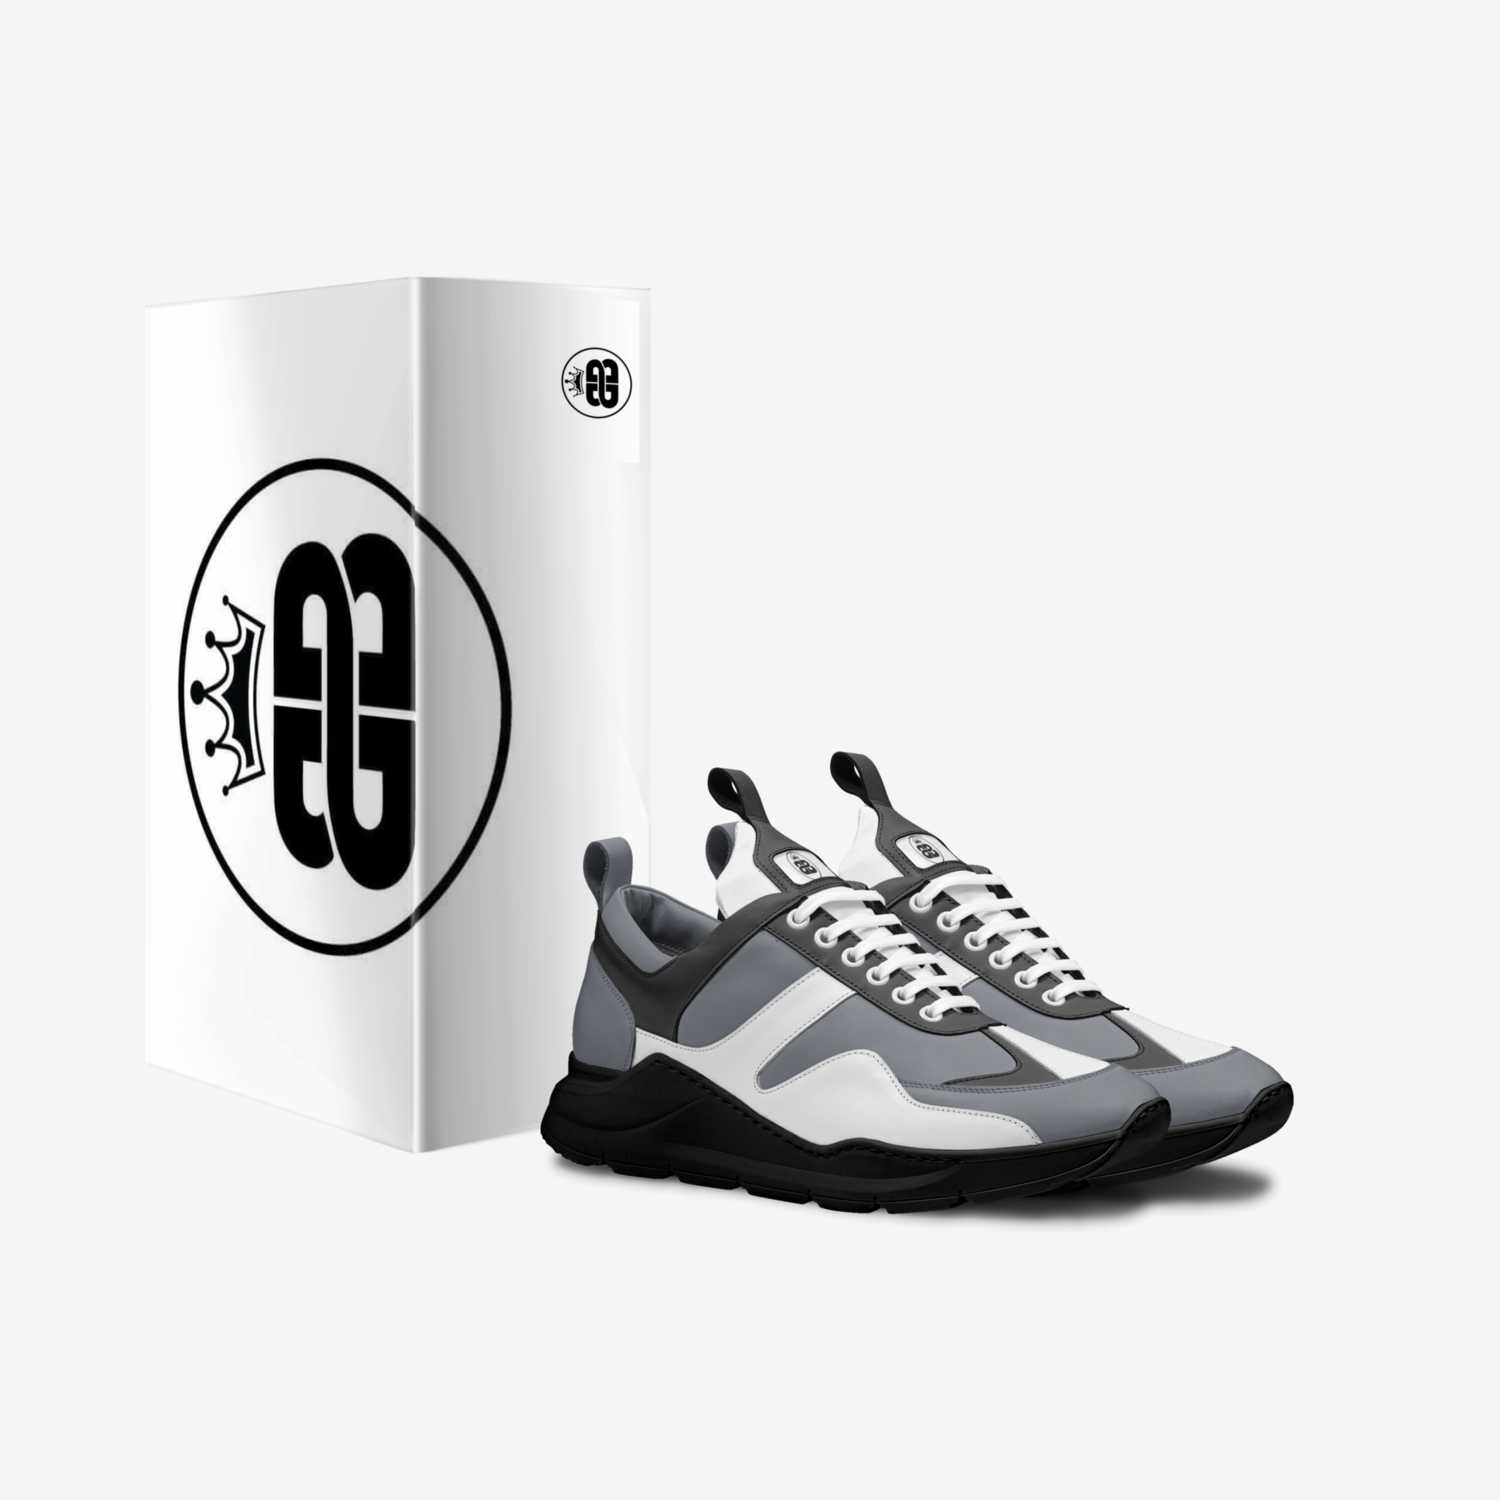 Benji Ben custom made in Italy shoes by Nikita Fluellen | Box view